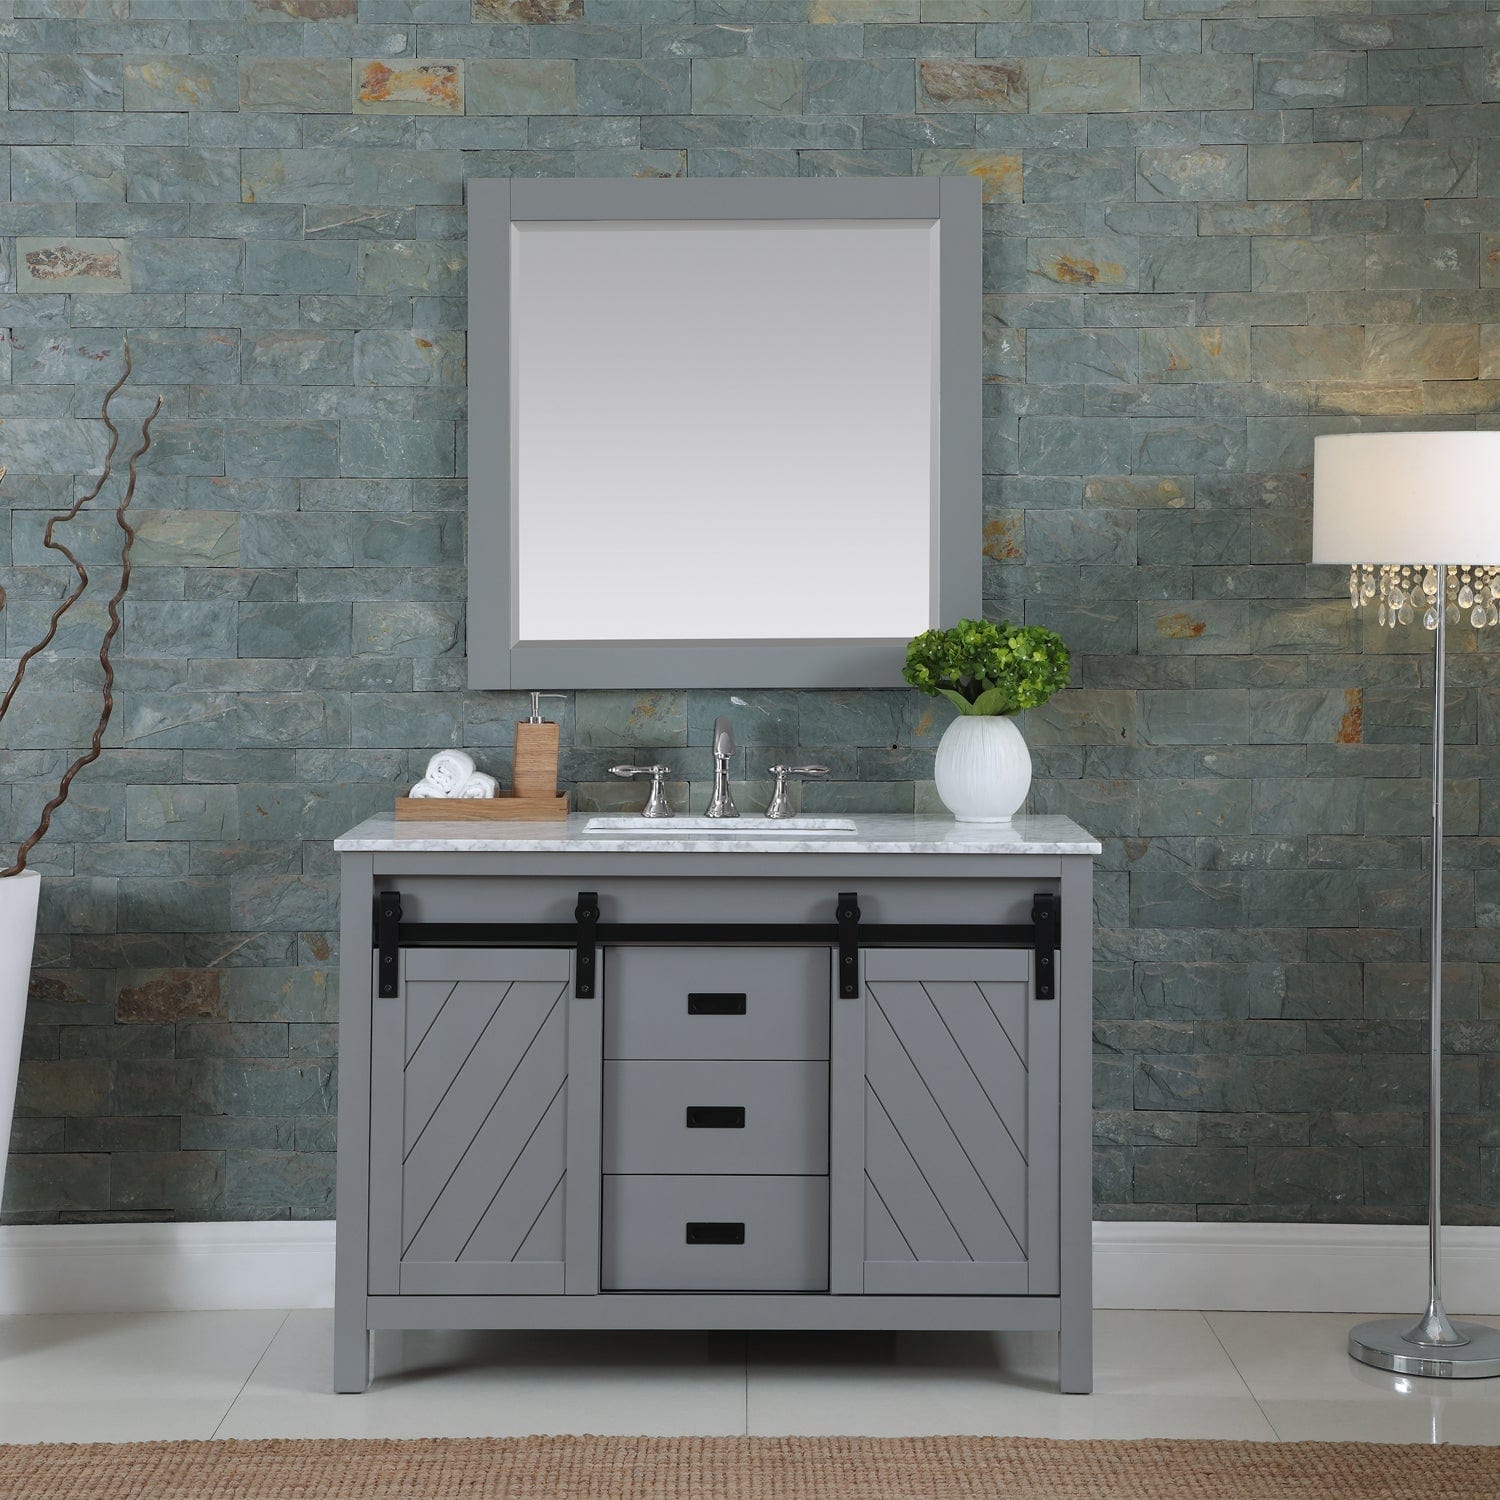 Altair Kinsley 48" Single Bathroom Vanity Set in Gray and Carrara White Marble Countertop with Mirror 536048-GR-CA - Molaix631112970471Vanity536048-GR-CA